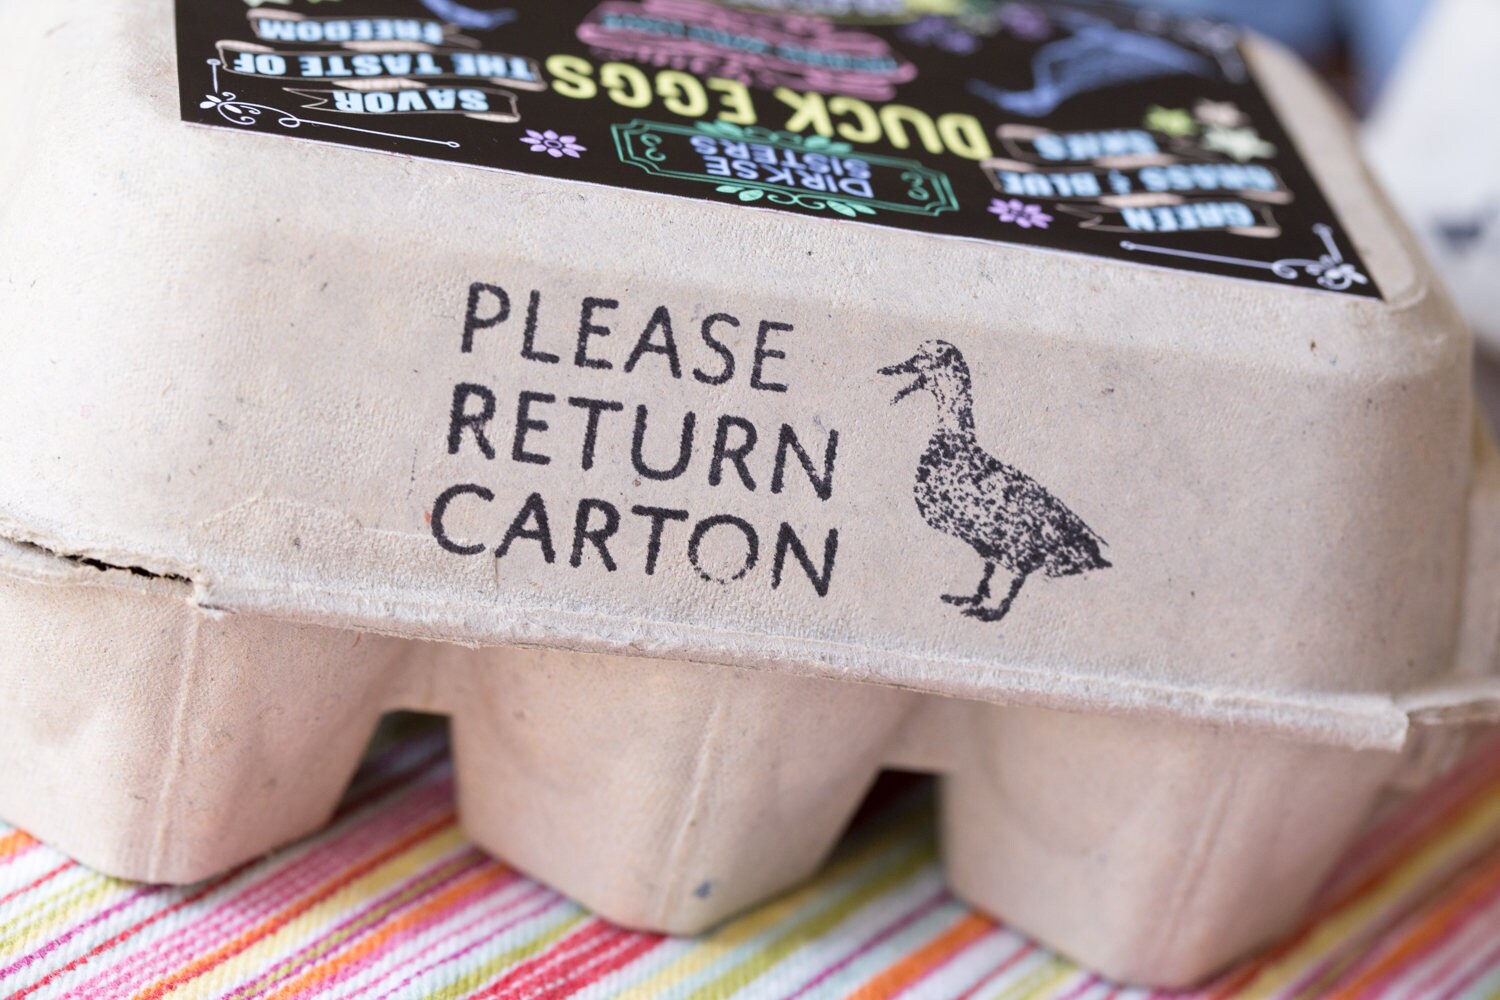 Farm Fresh Duck Egg Carton Perpetual Calendar Date Gathered Square